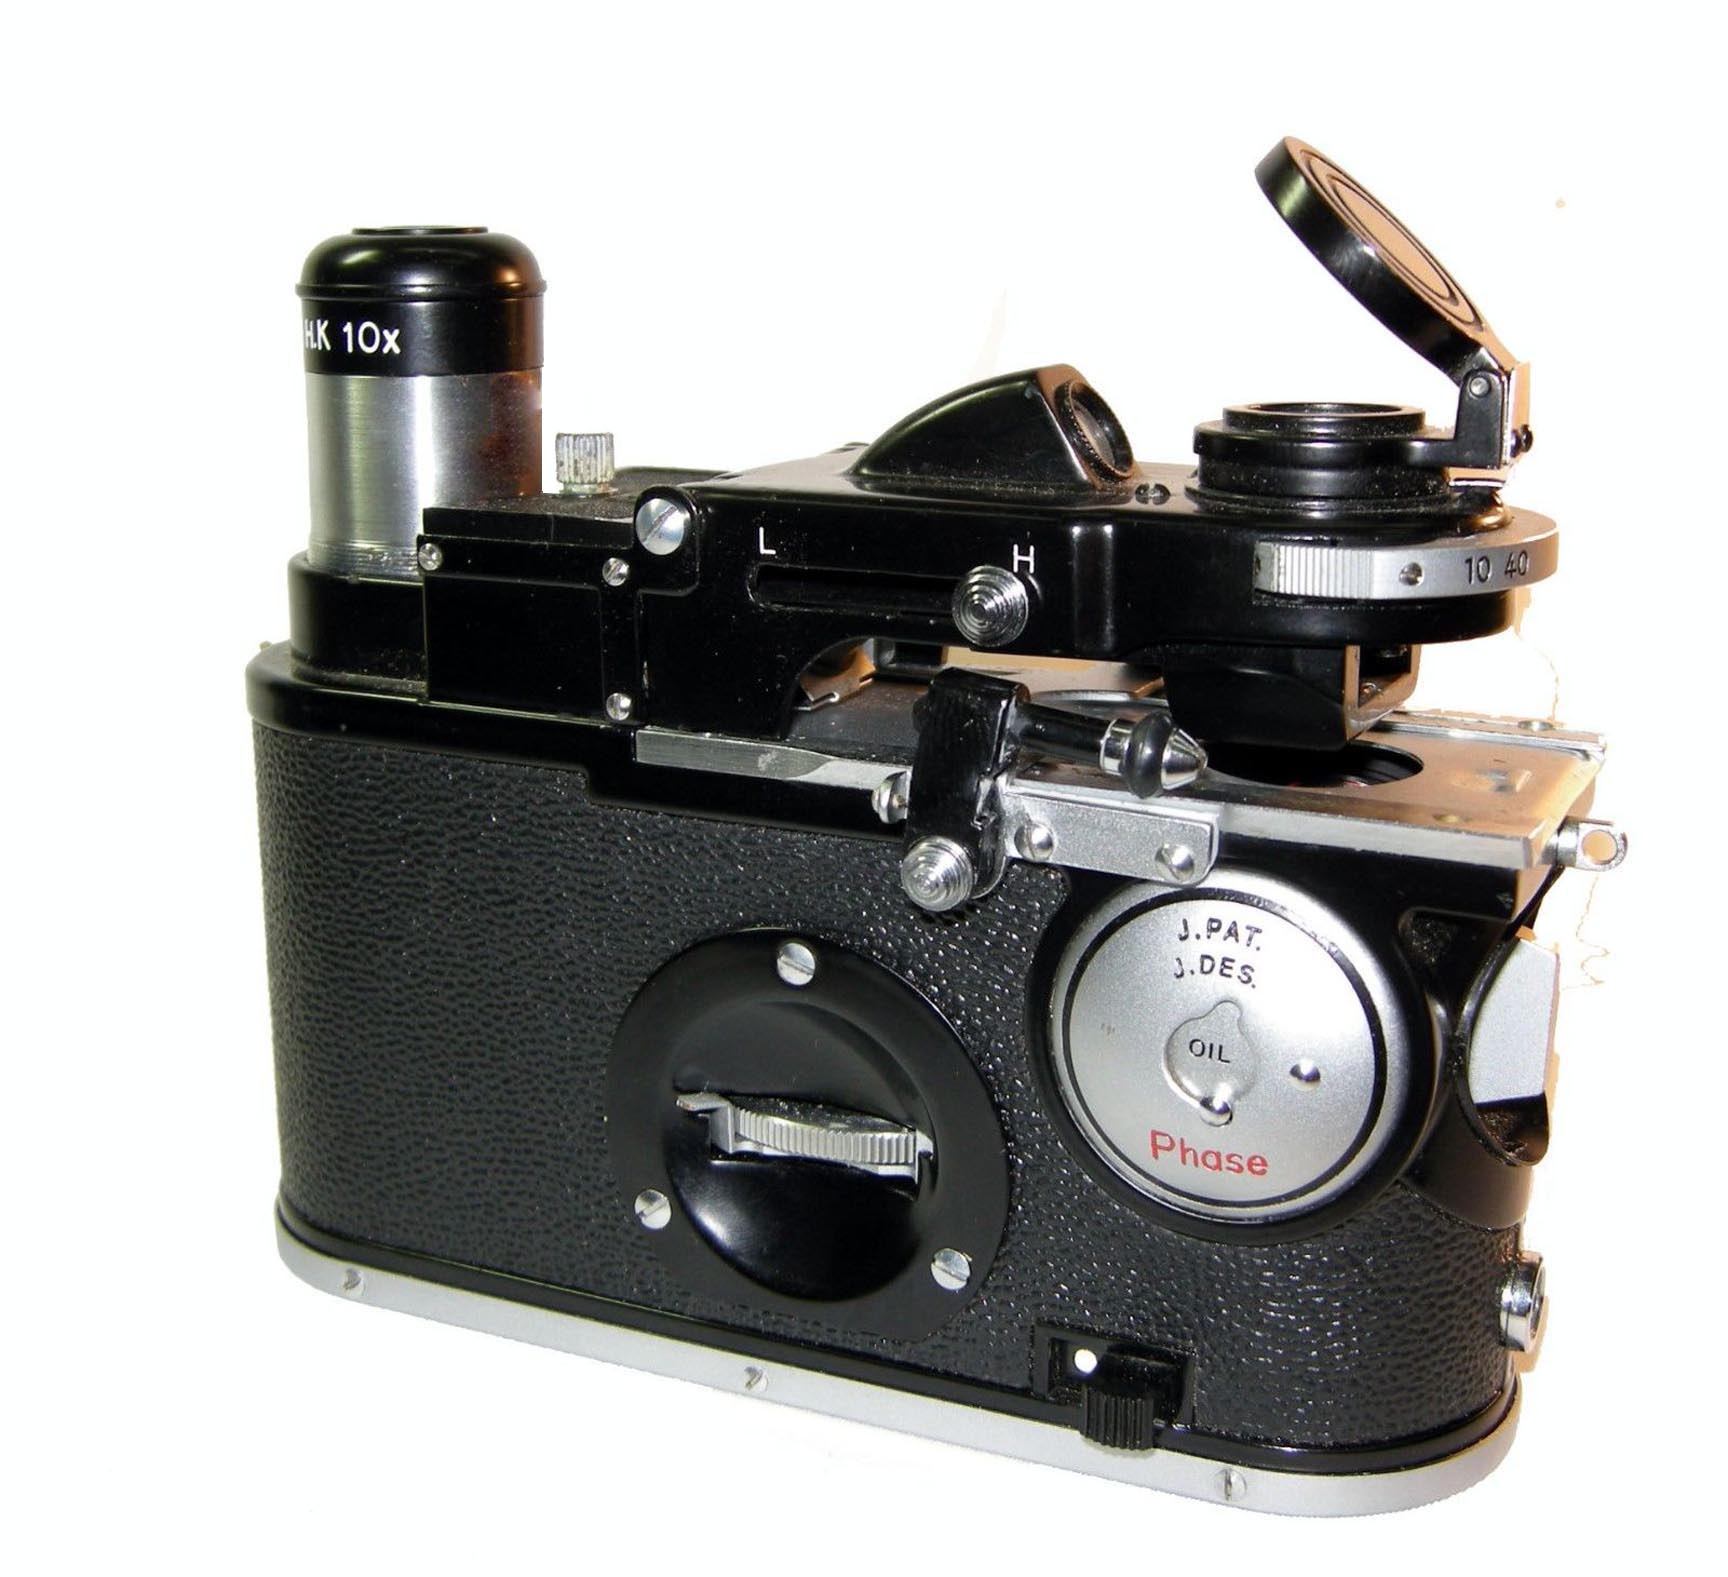 Nikon HP McArthur-type Microscope